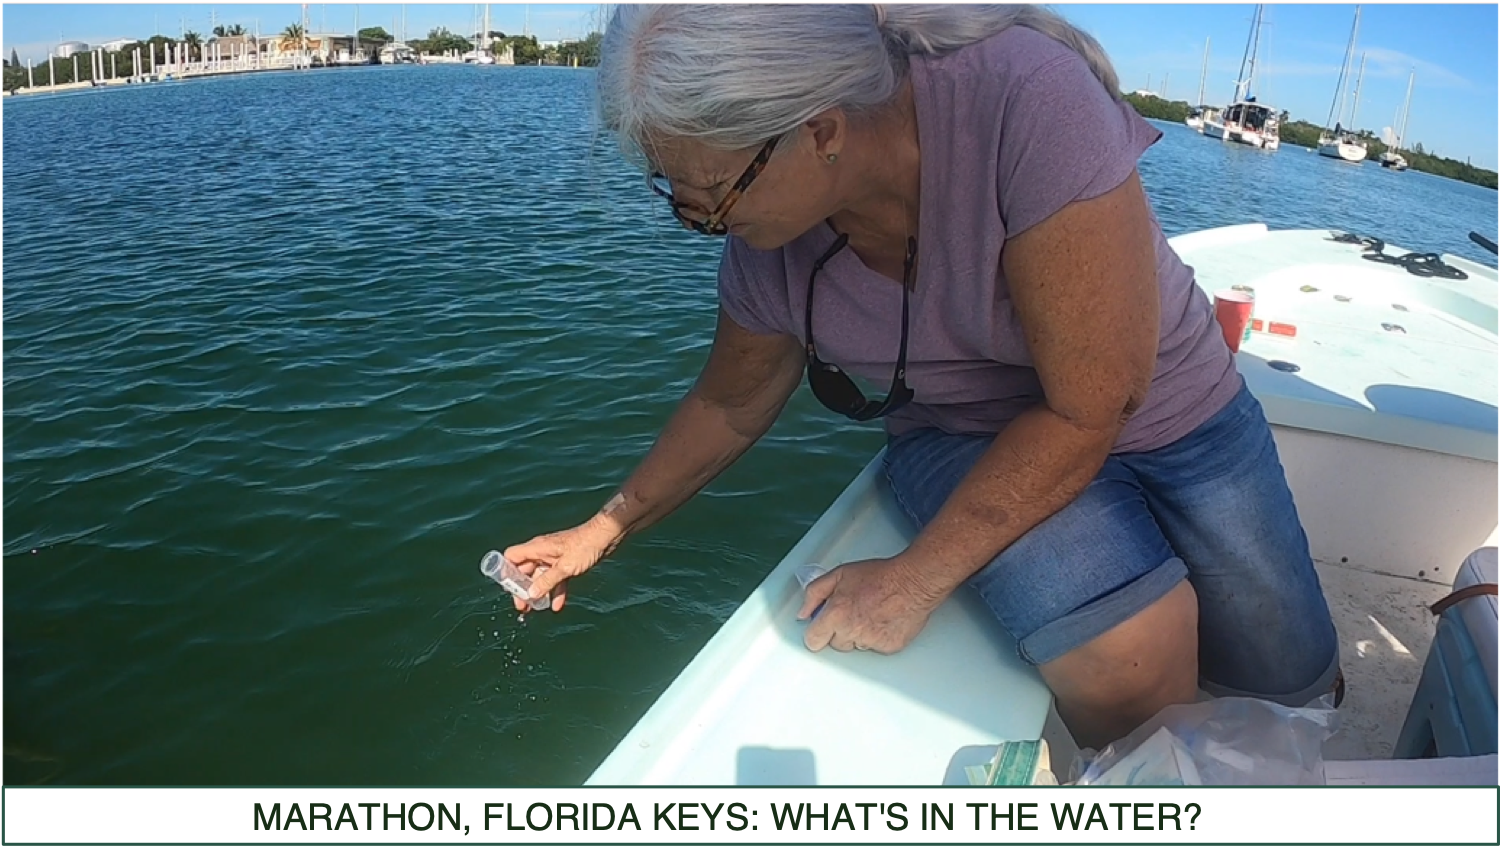 MARATHON, FLORIDA KEYS: What’s in the water?